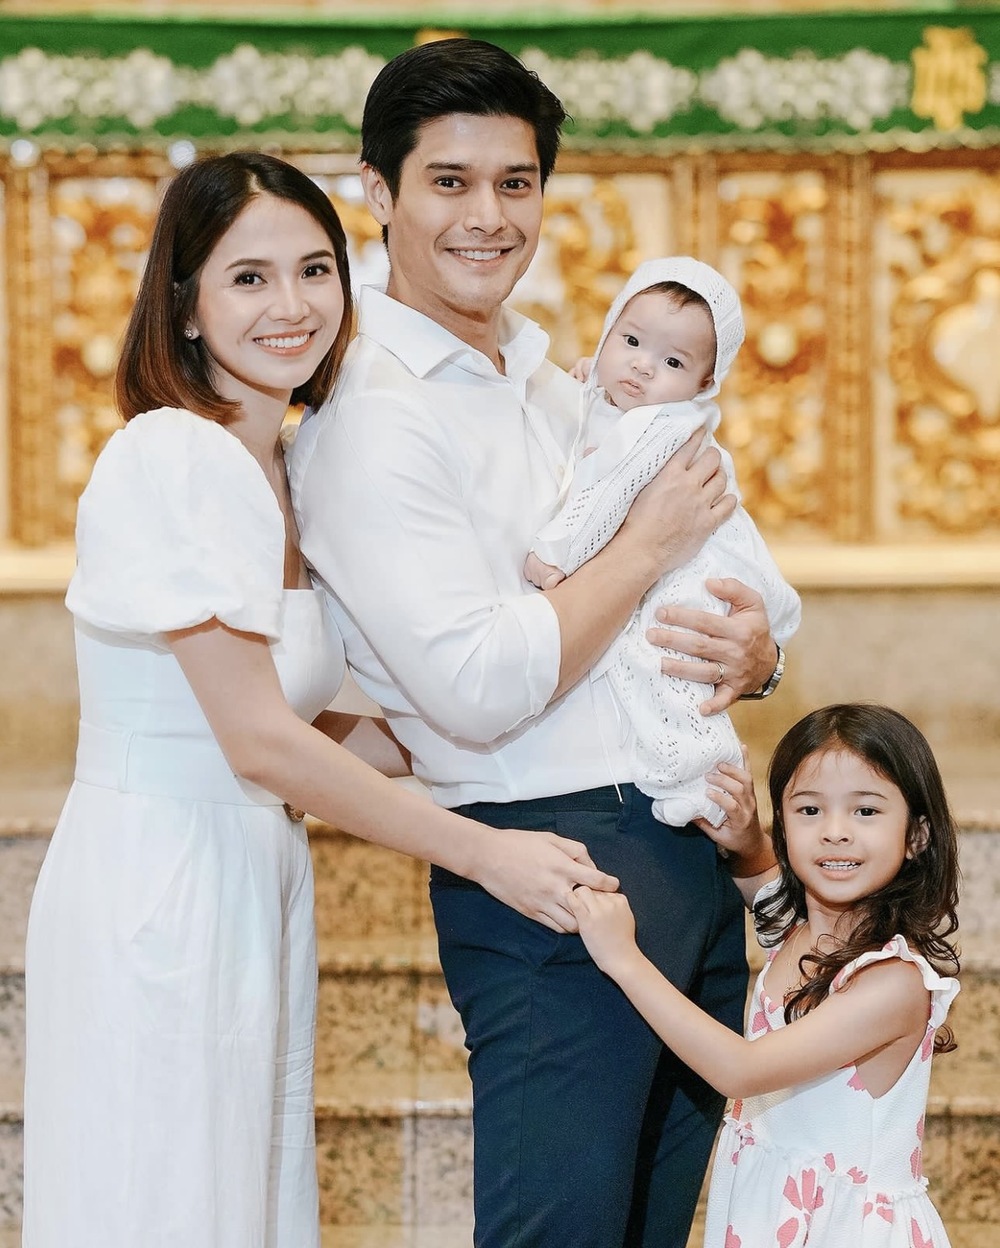 JC de Vera and his wife Rikkah Alyssa Cruz-de Vera recently held a private ceremony for the baptism of their second daughter, Laura Amanda de Vera.